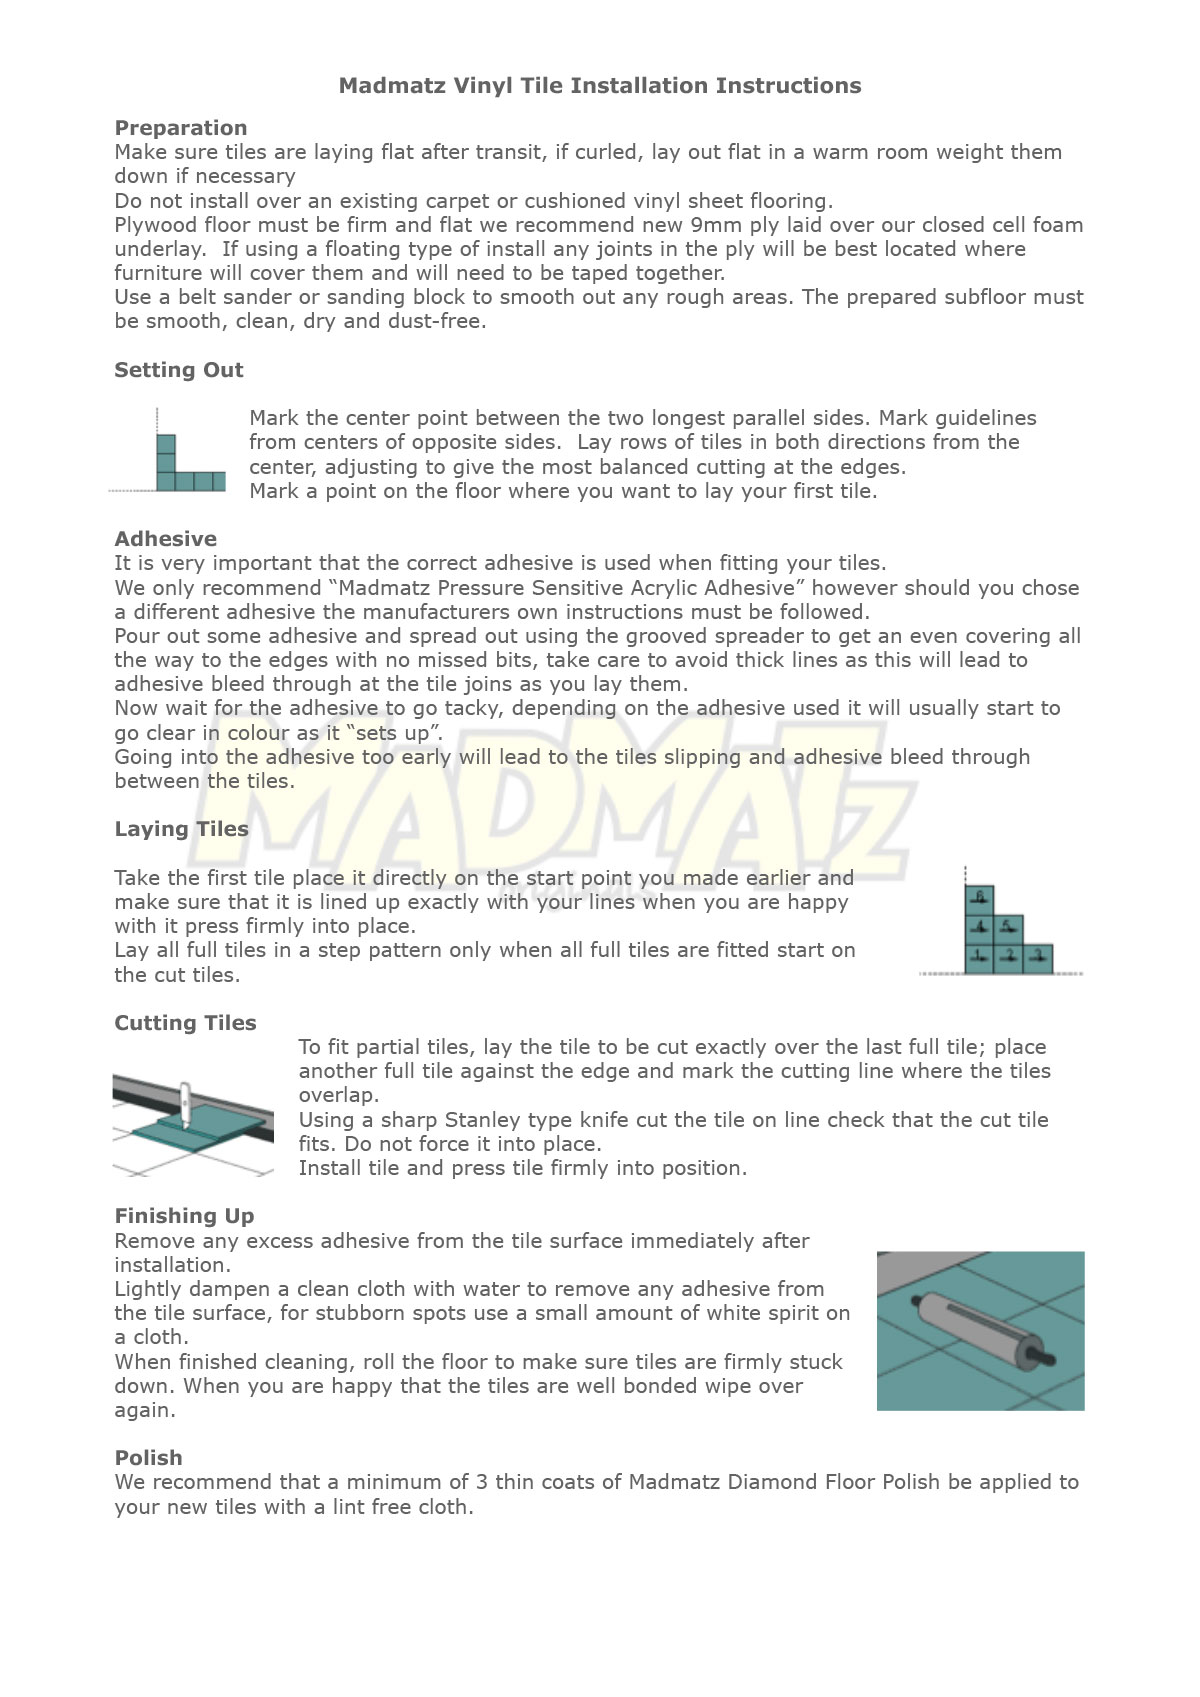 Vinyl tile fitting guide for camper van flooring